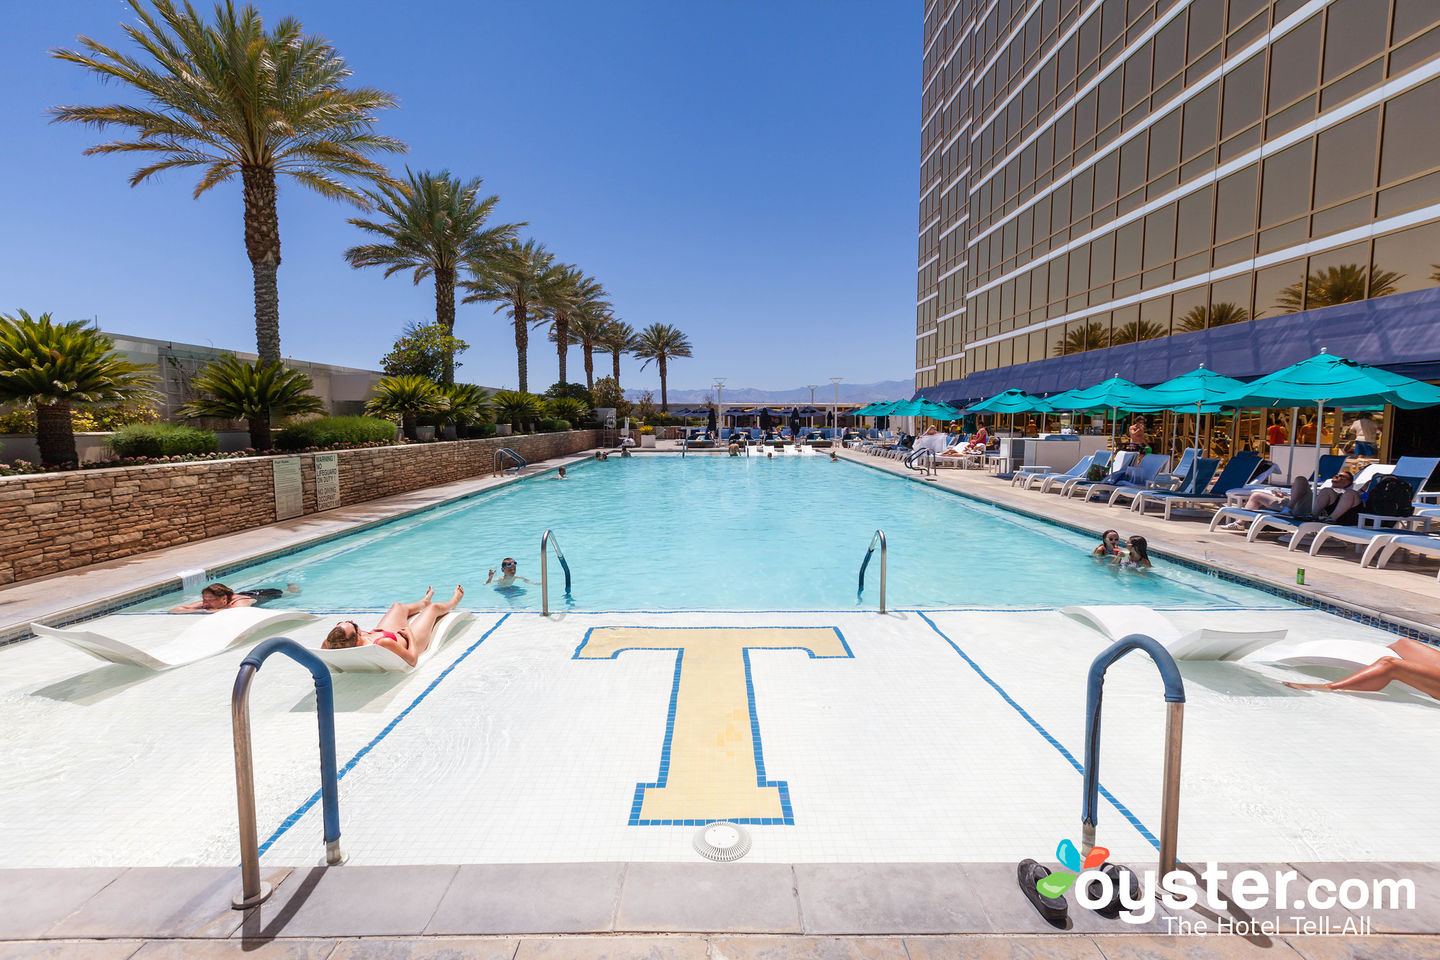 Hotels In Vegas, Trump Hotel Las Vegas - Hotel Overview